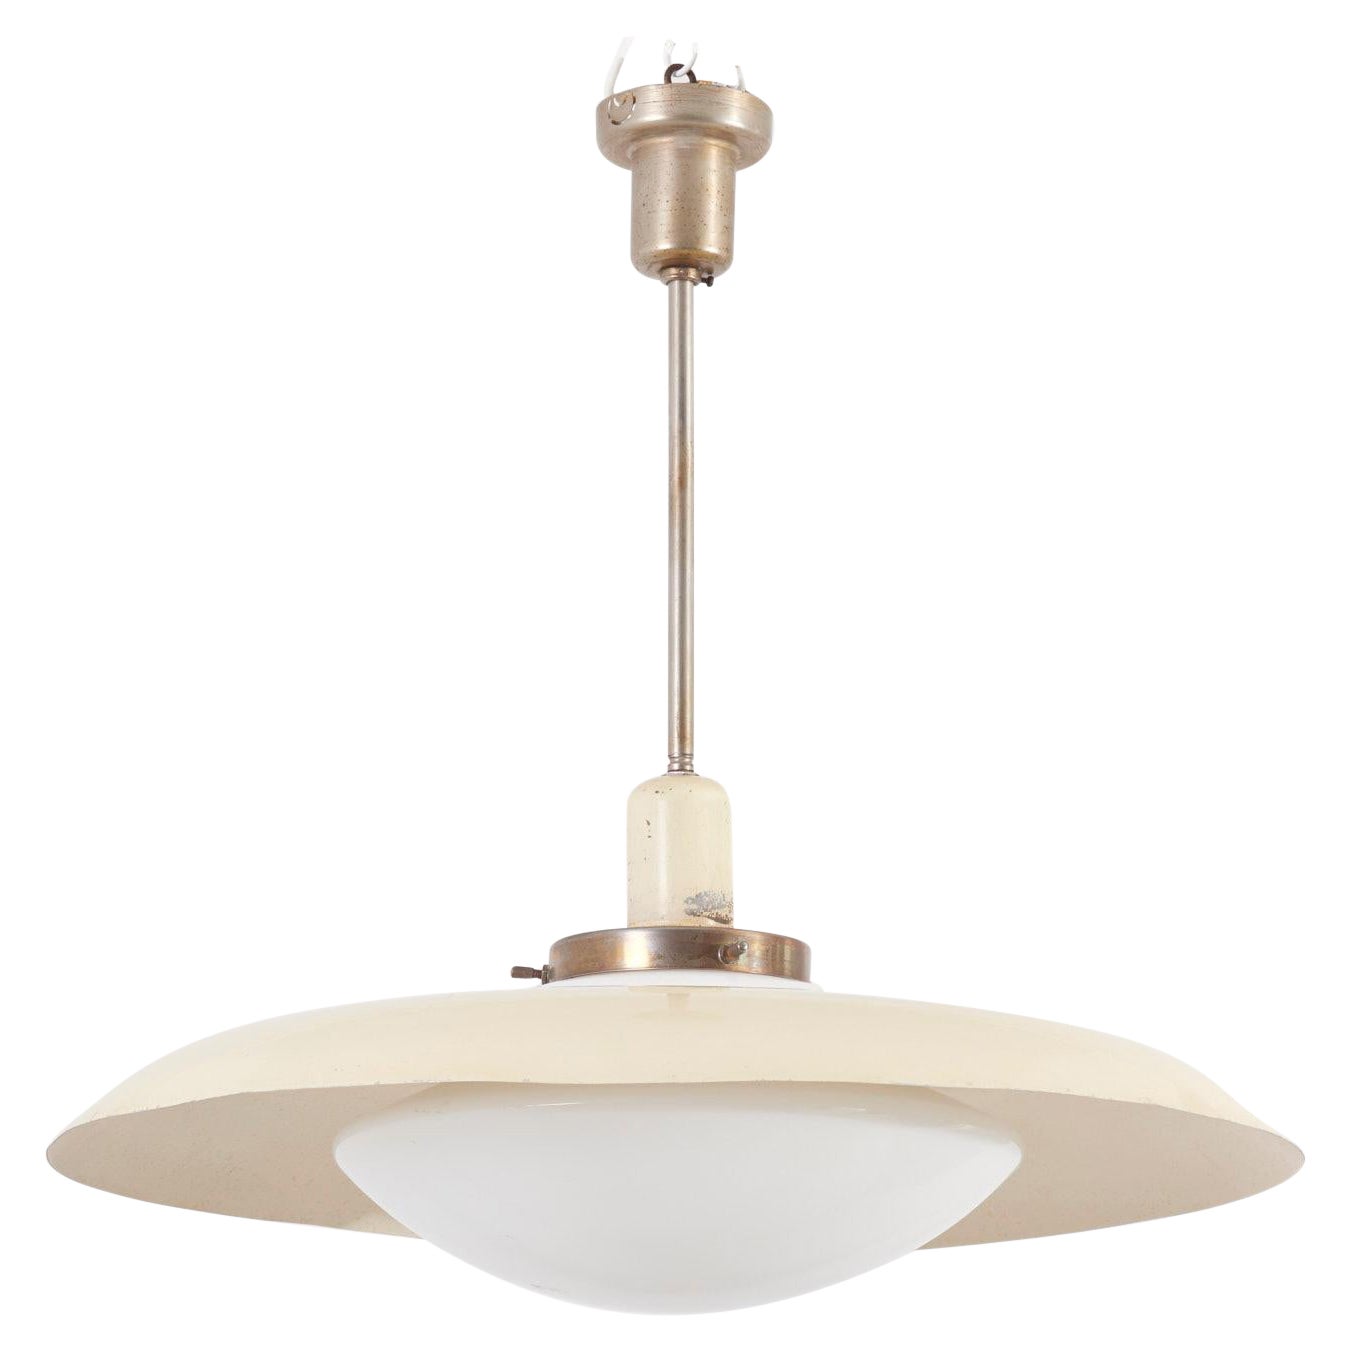 1930s Bauhaus Style Pendant Lamp For Sale